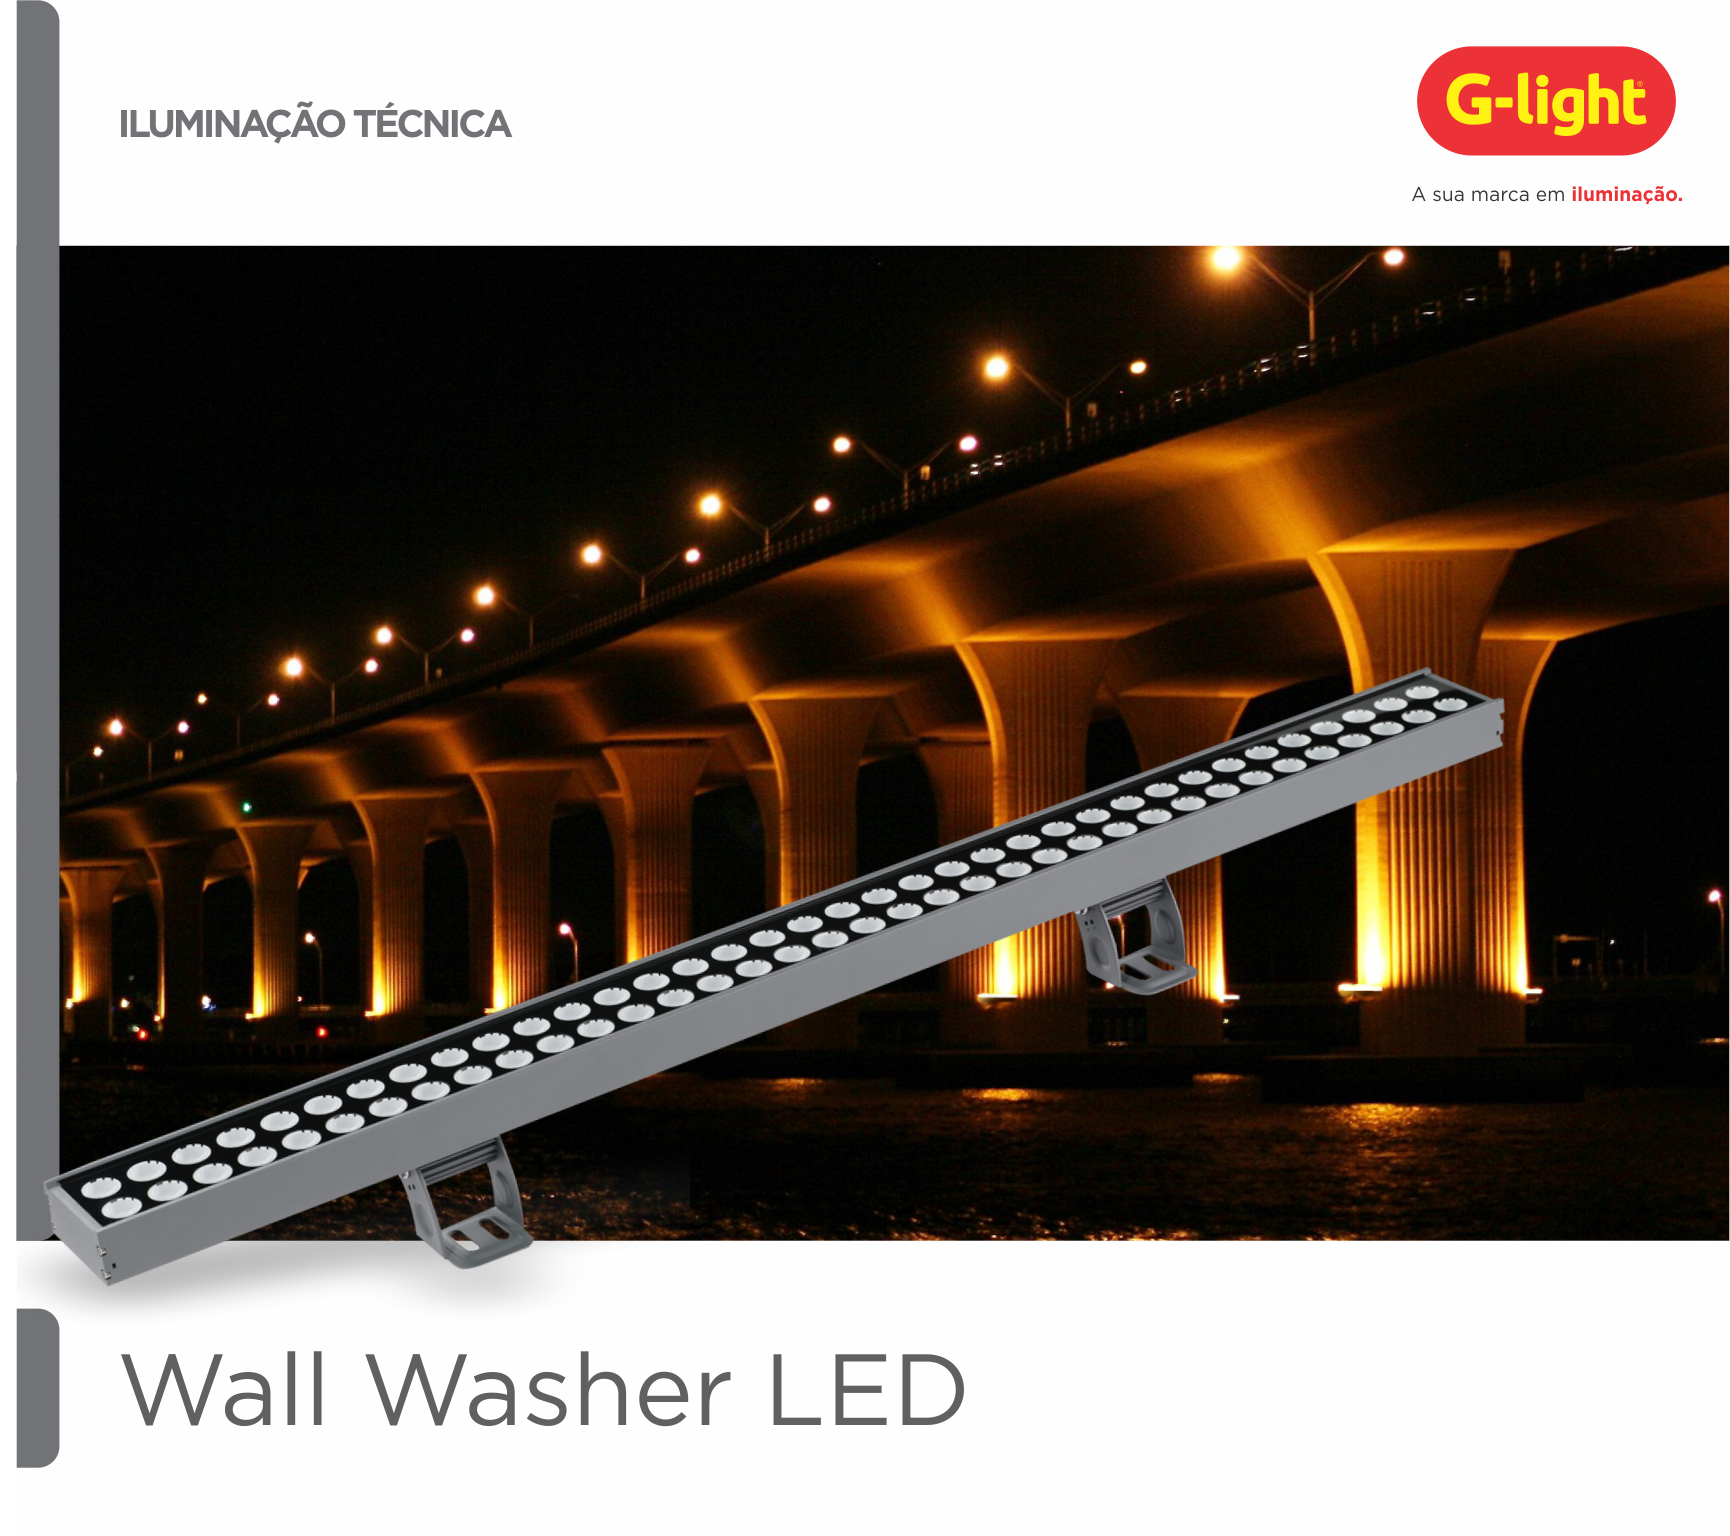 Wall Washer LED